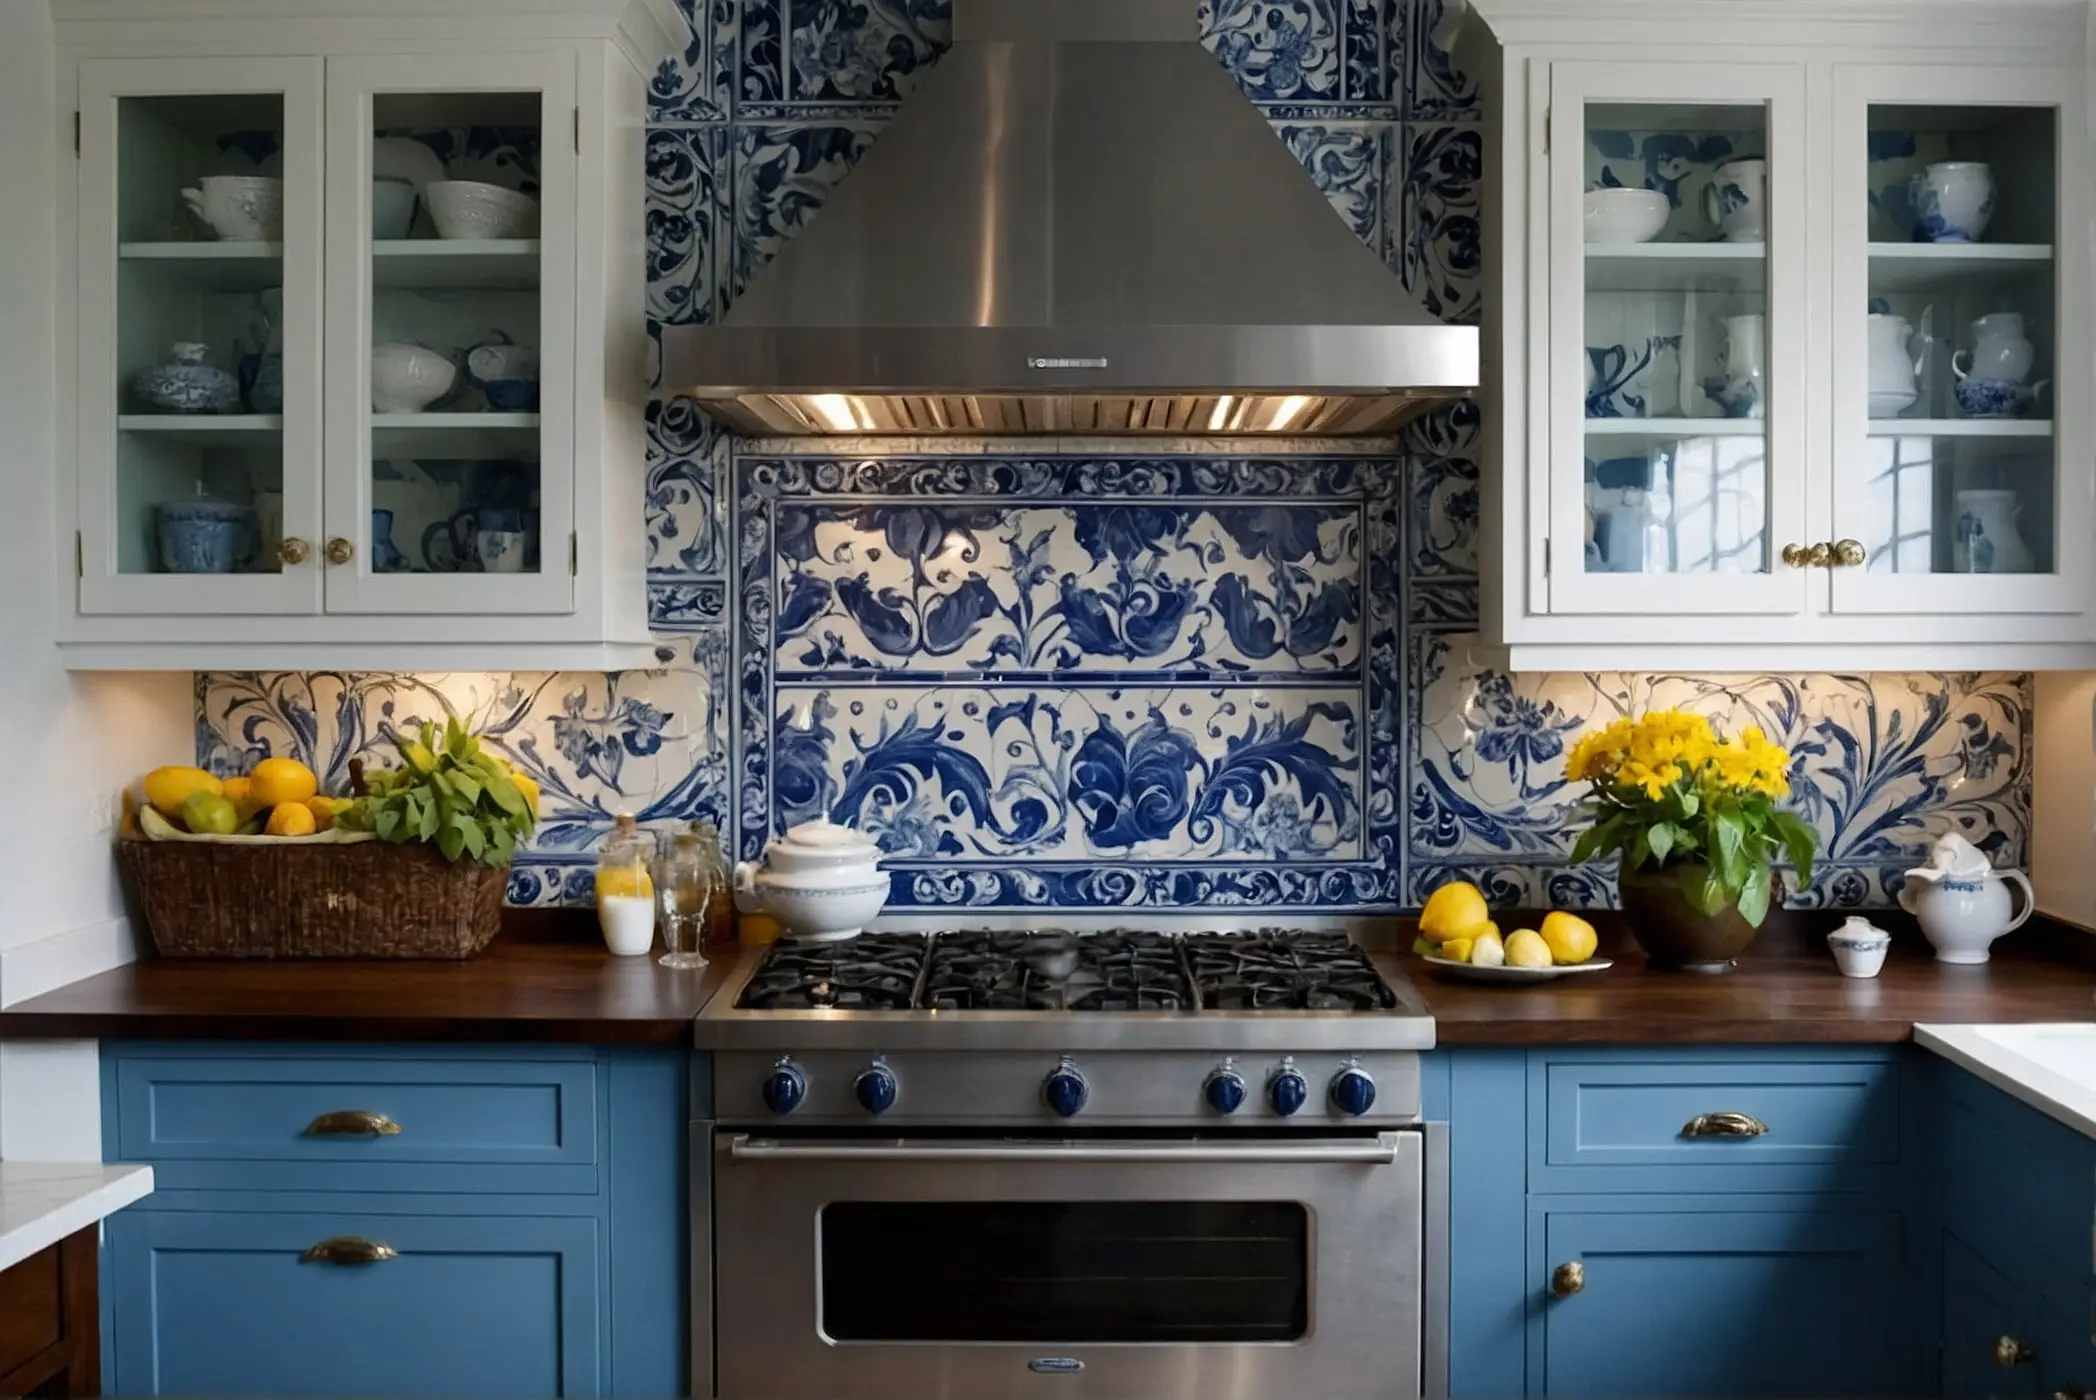 Backsplash ideas for Blue and White Kitchen Cabinets 1